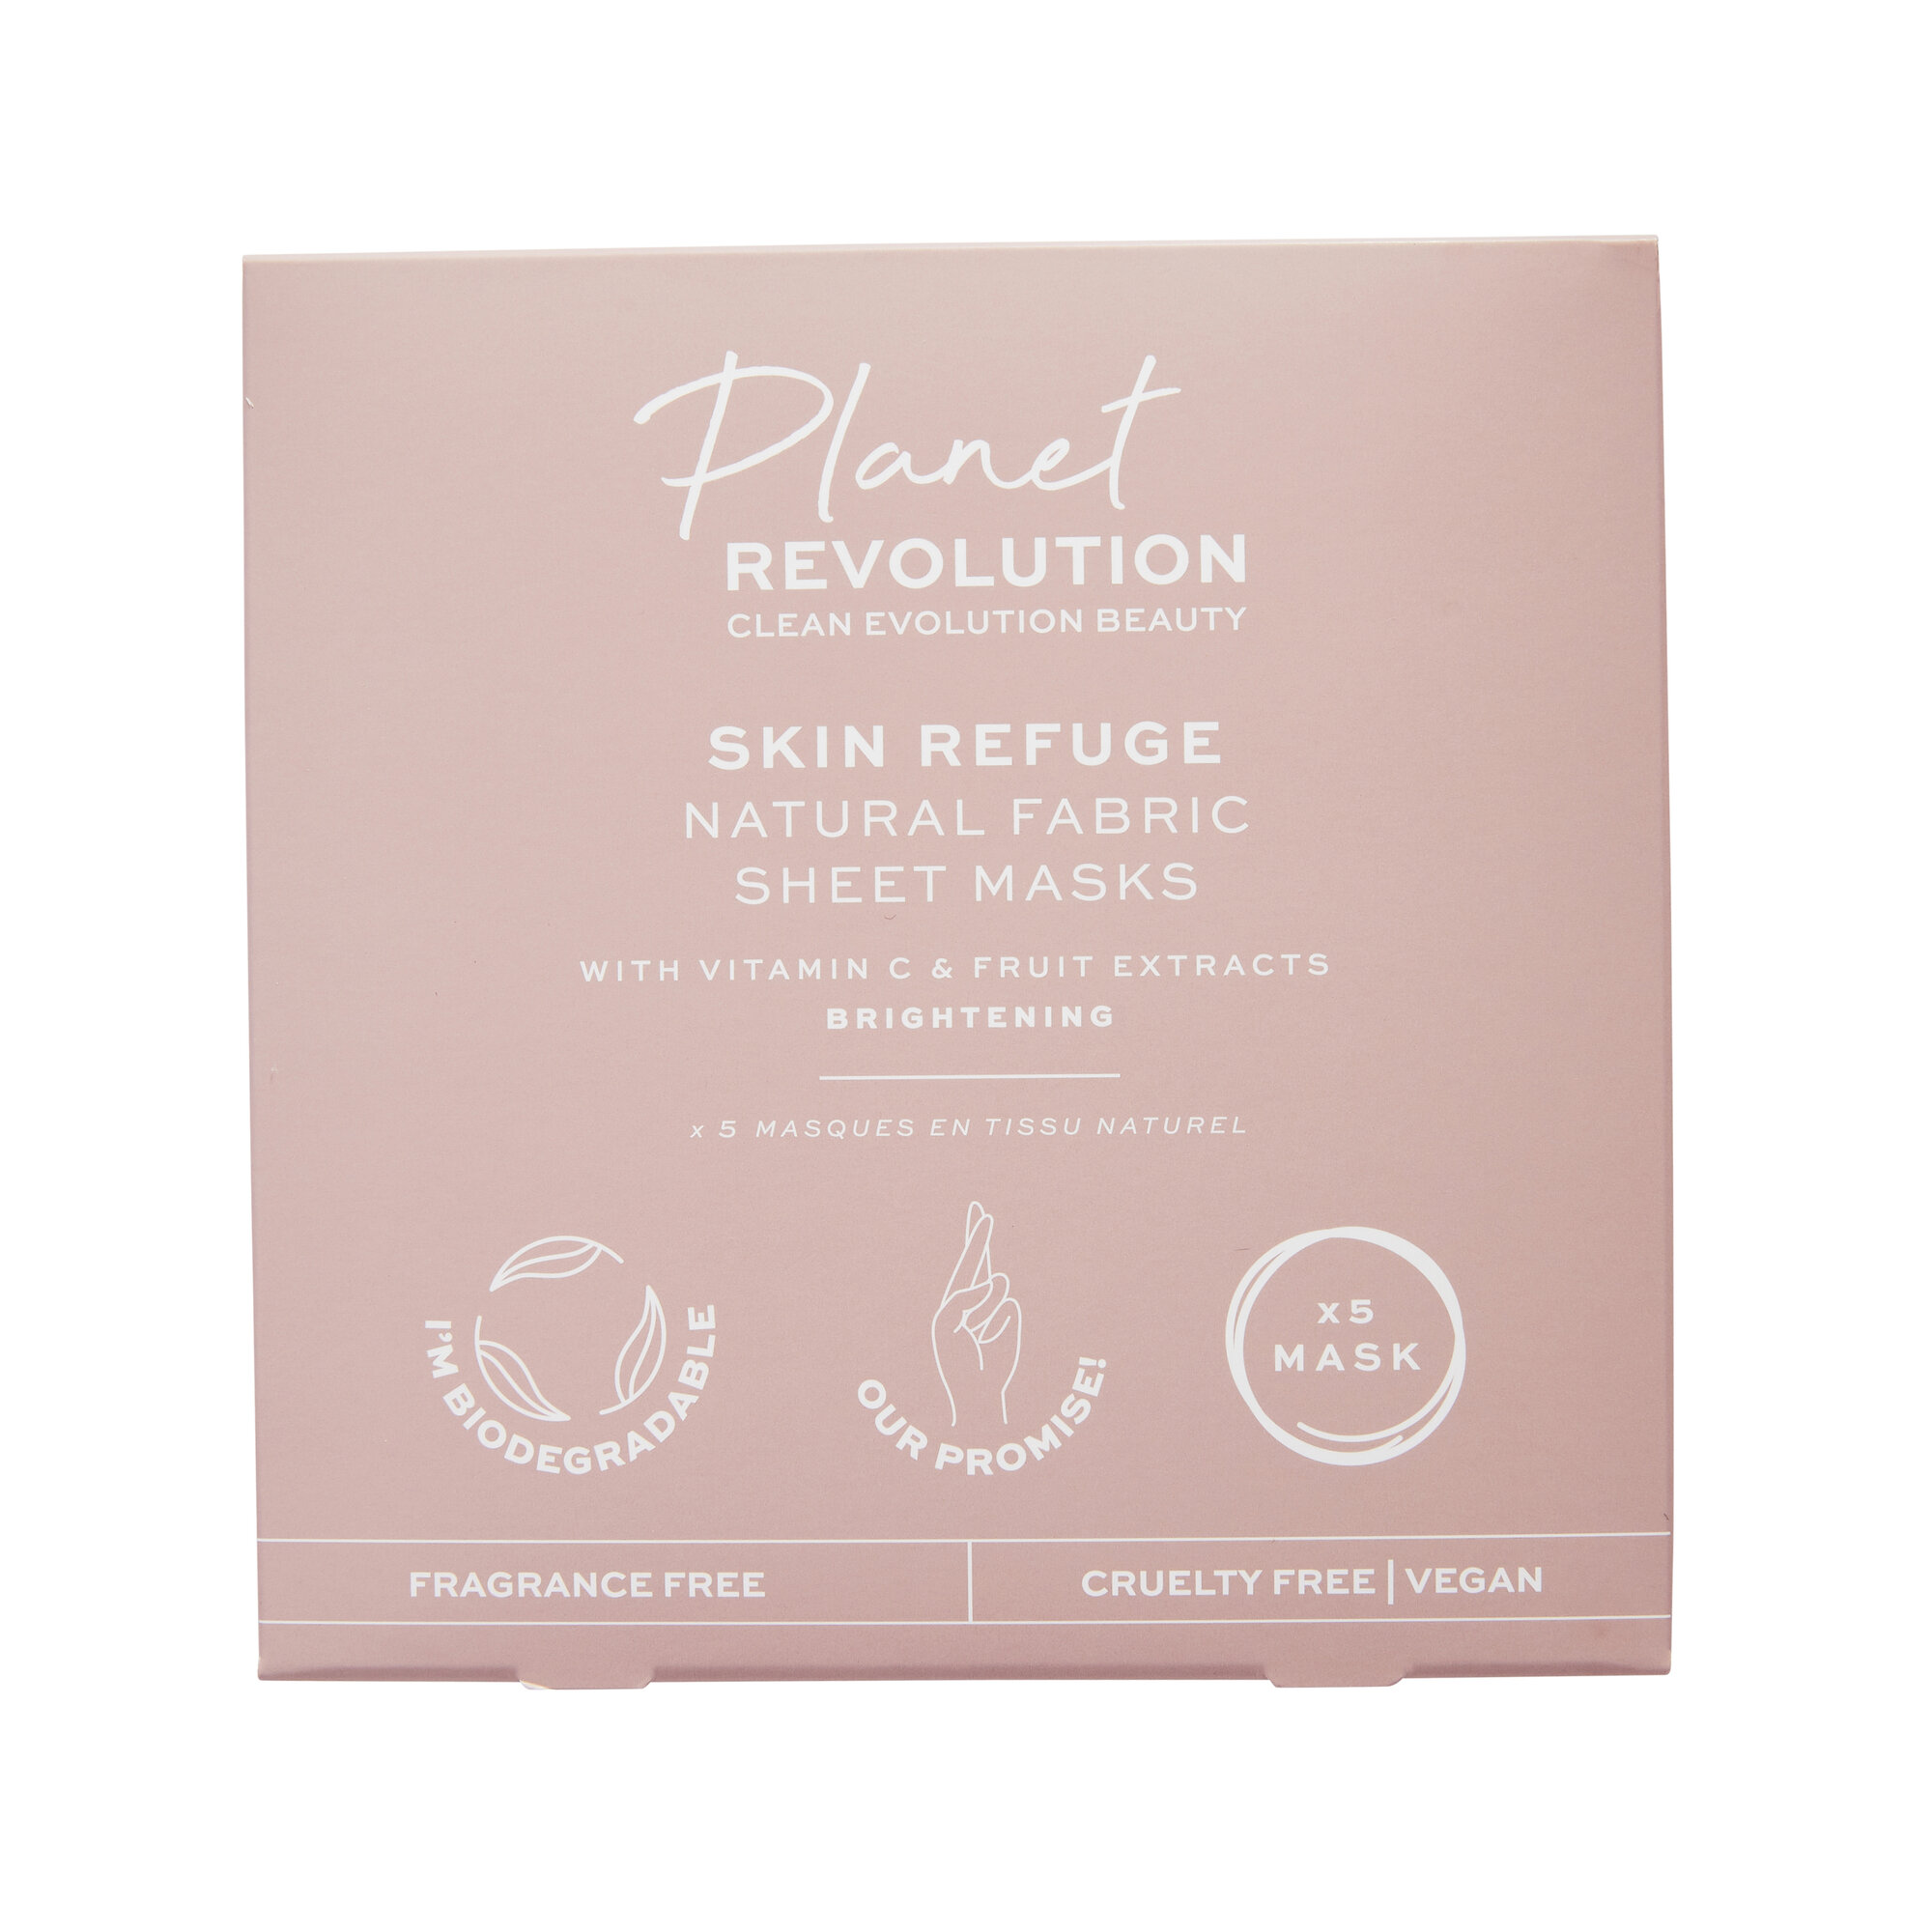 Planet Revolution Skin Refuge Brightening Fabric Sheet Masks